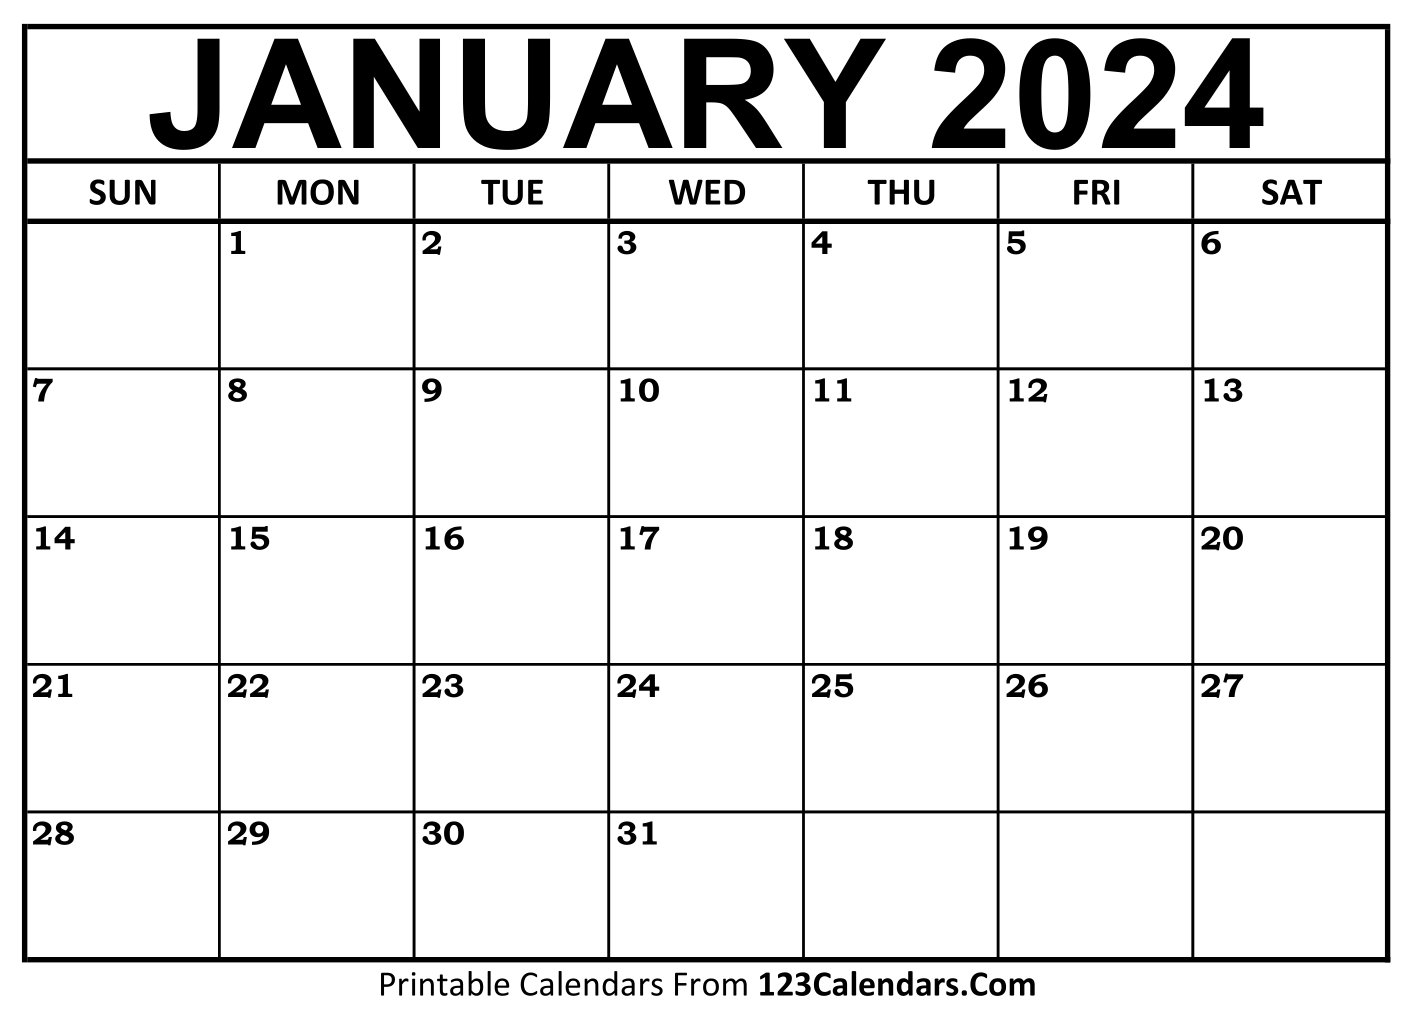 Printable January 2024 Calendar Templates - 123Calendars for 2024 Printable Calendar January